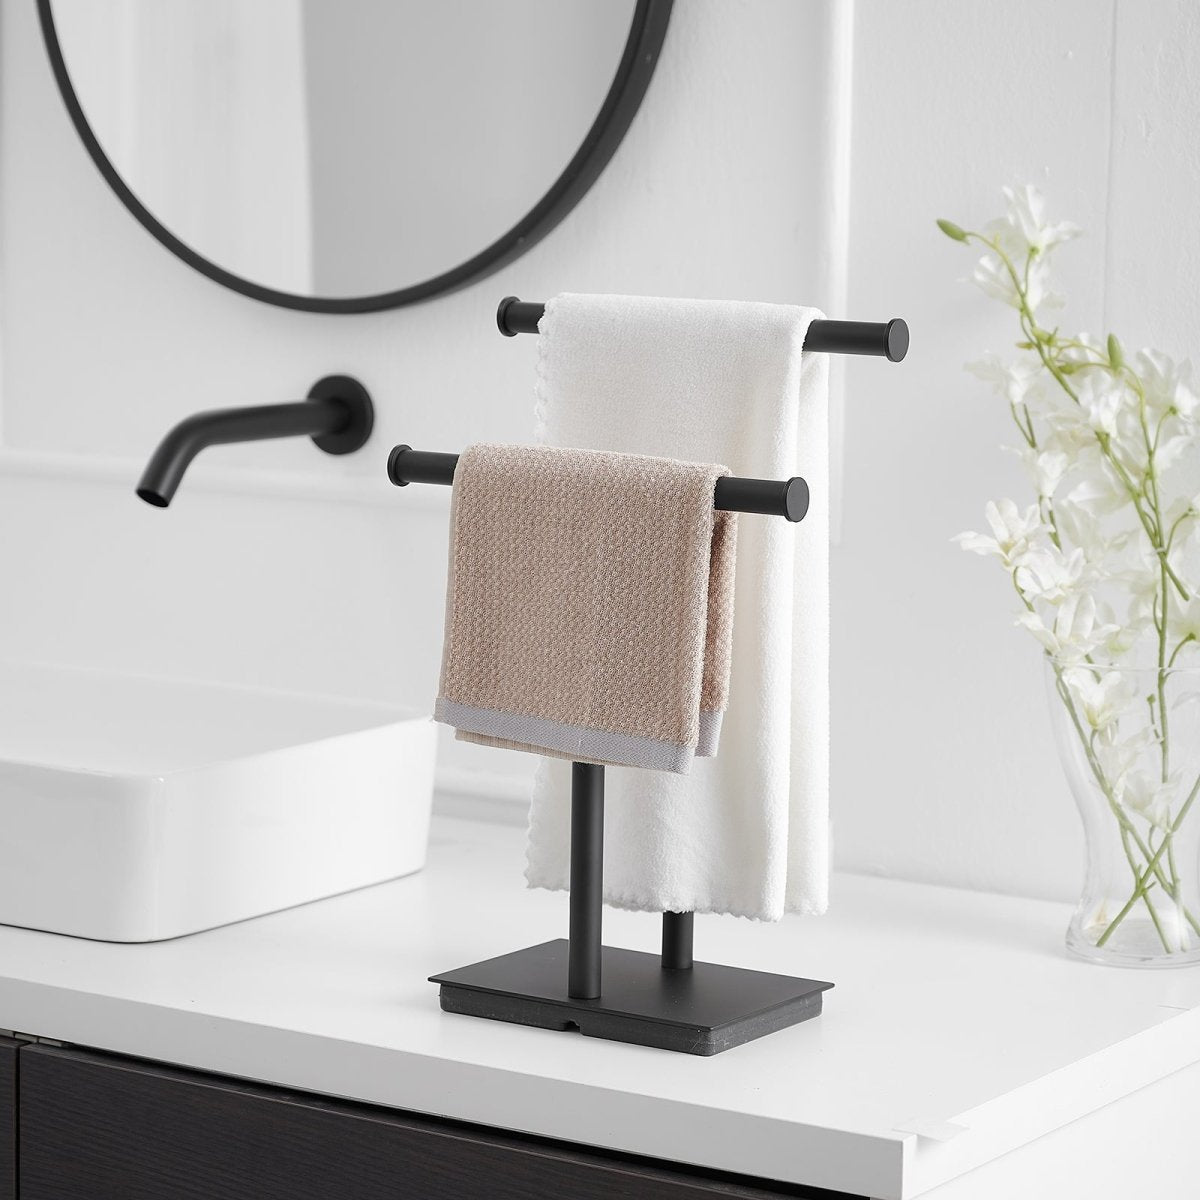 Toilet Paper Holder with 2-Tier Hand Towel Racks in Black - buyfaucet.com